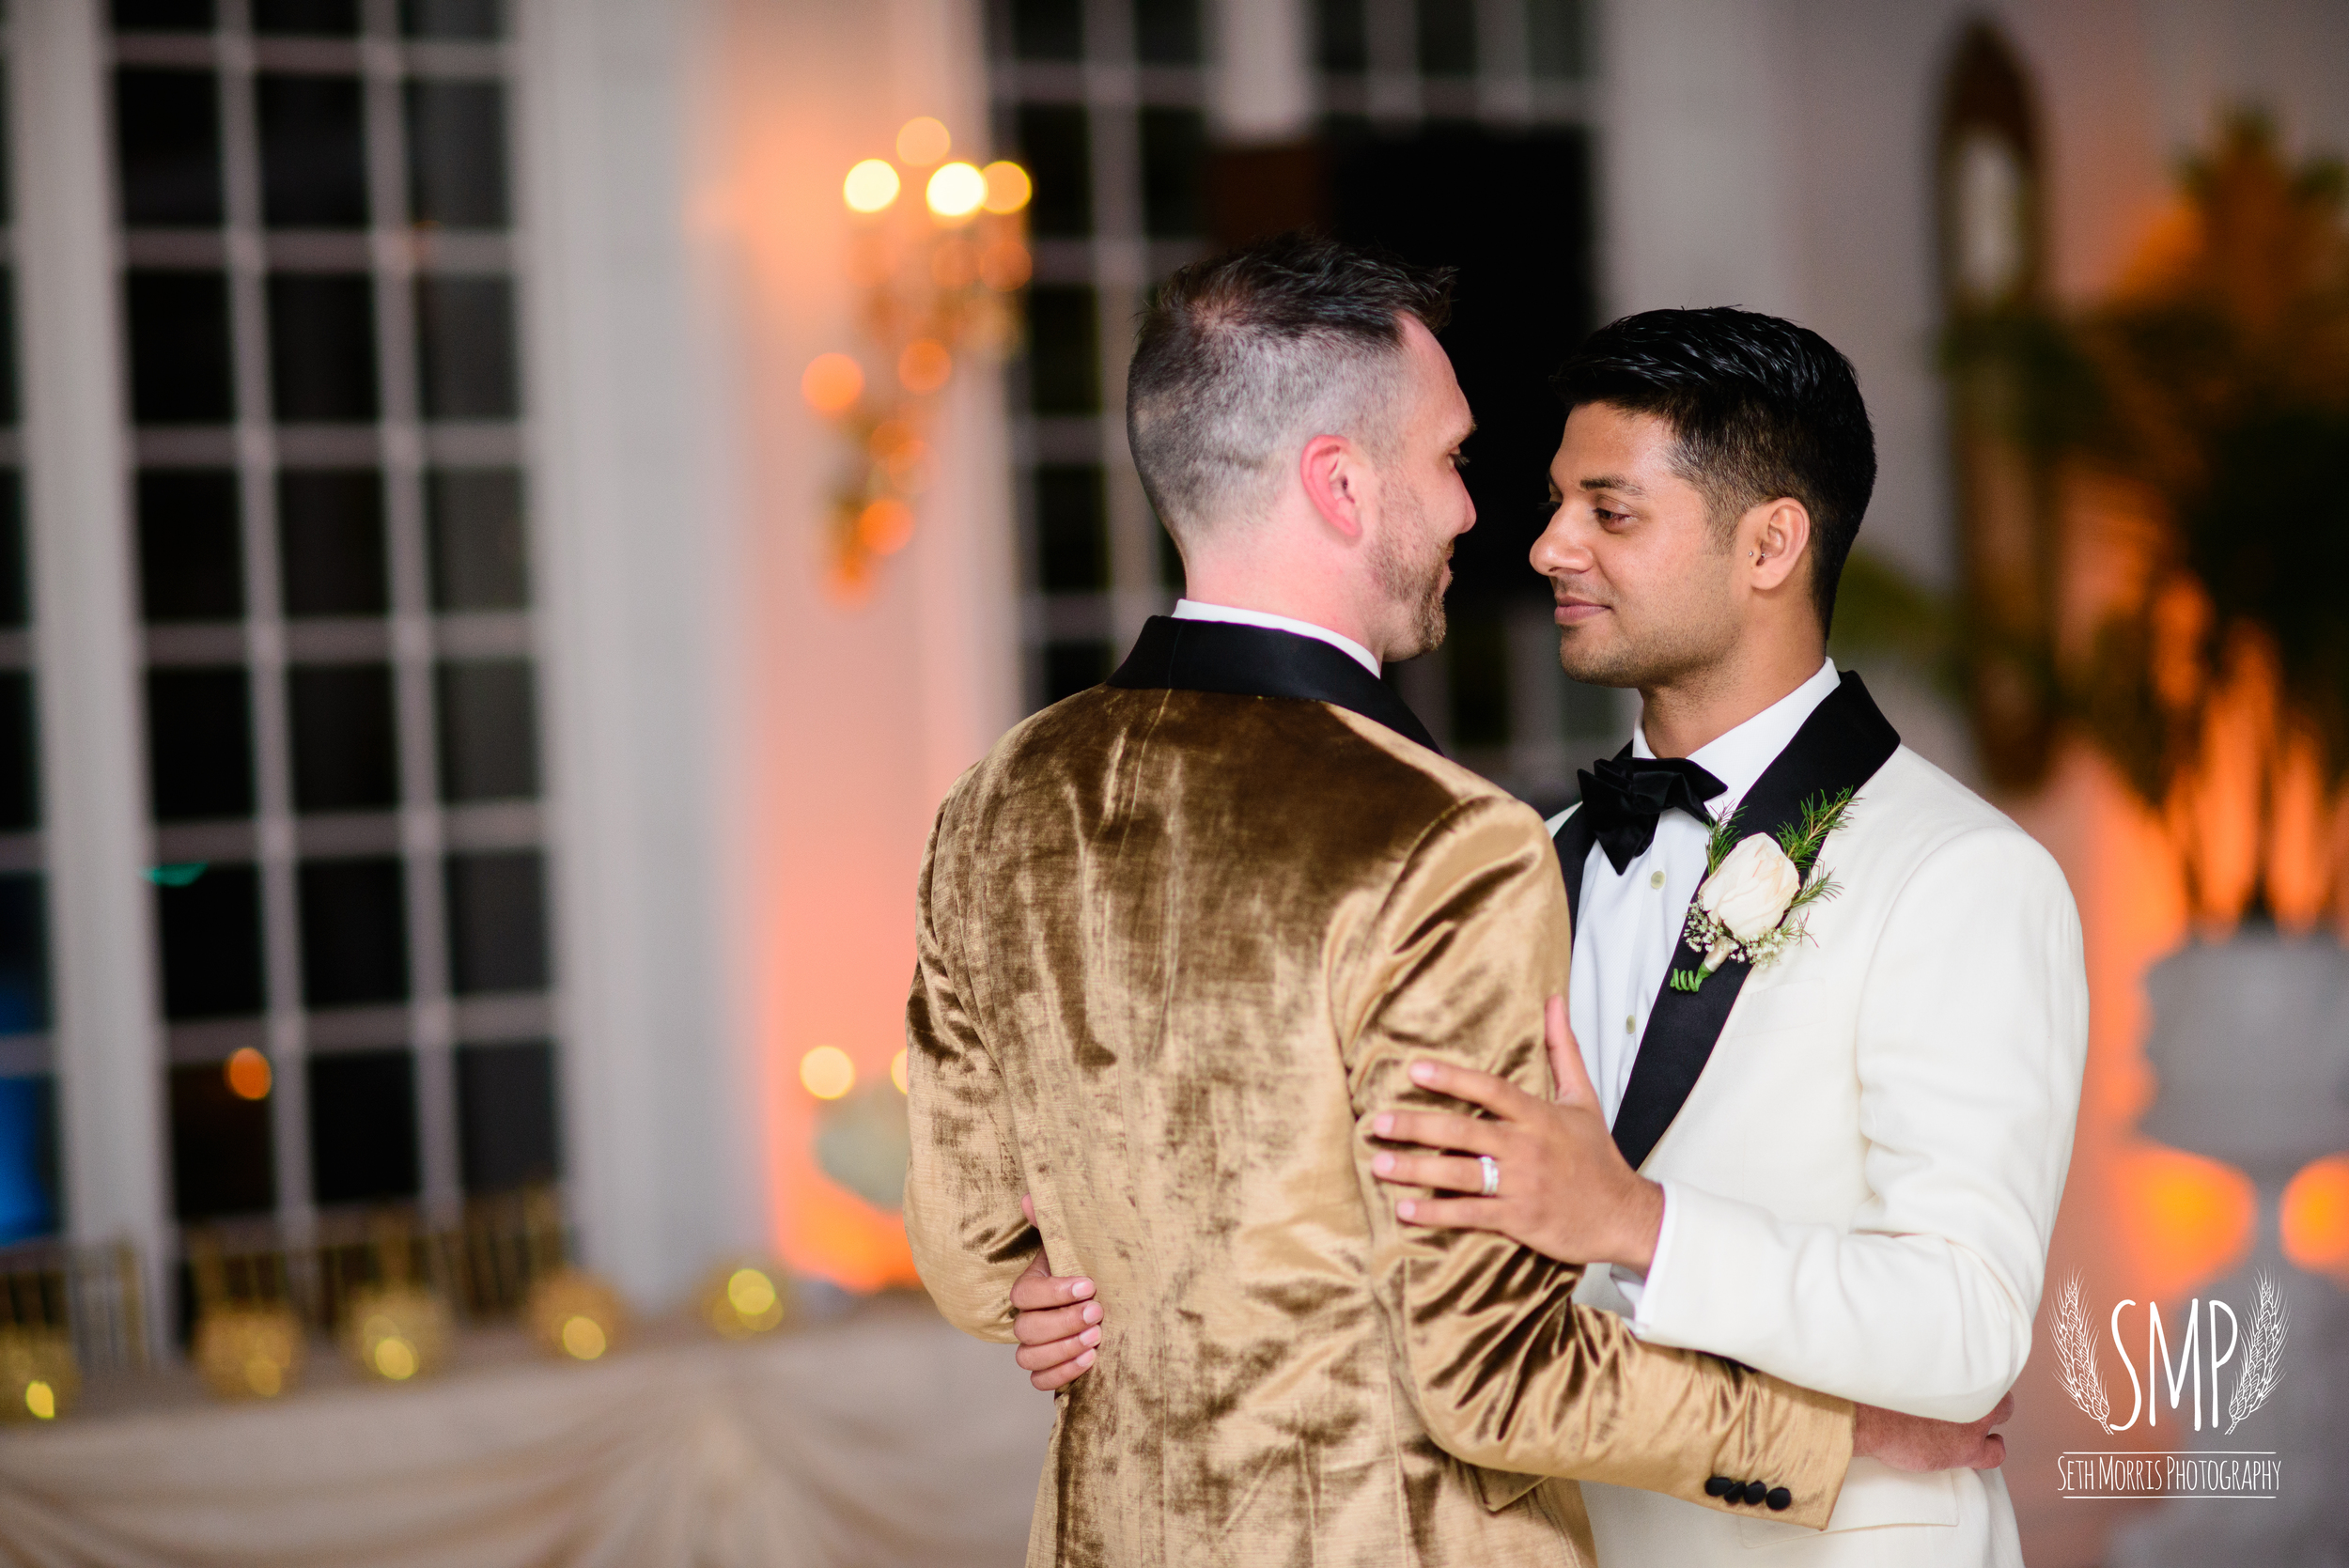 same-sex-wedding-photographer-chicago-illinois-109.jpg